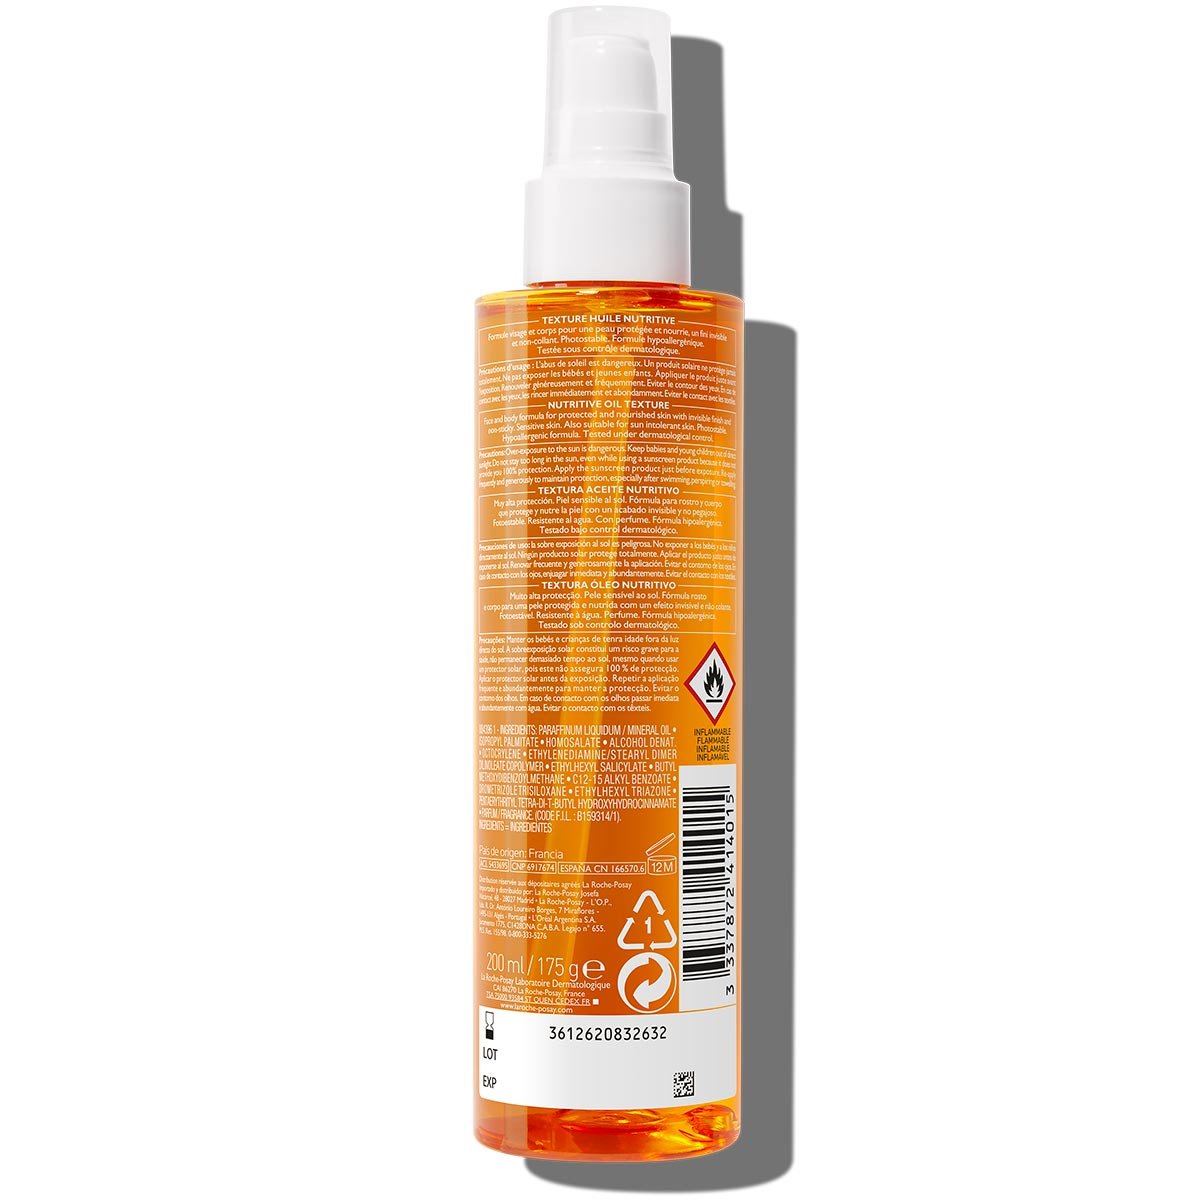 La Roche Posay ProductPage Sun Anthelios XL Nutritive Oil Comfort Spf5